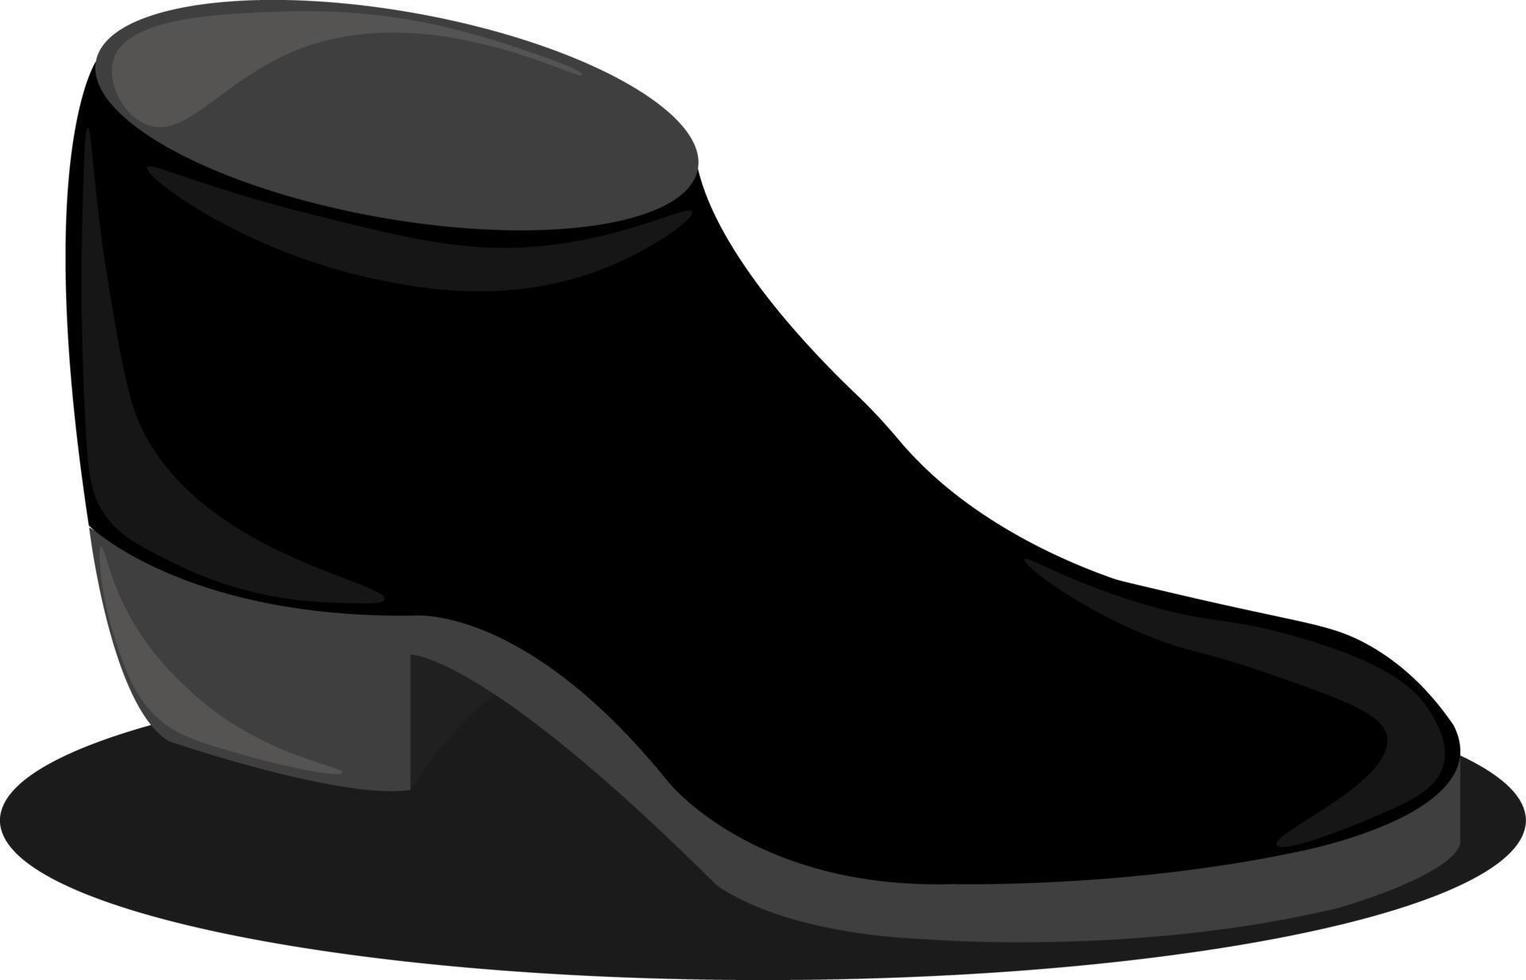 Zapatos clásicos negros, ilustración, vector sobre fondo blanco.